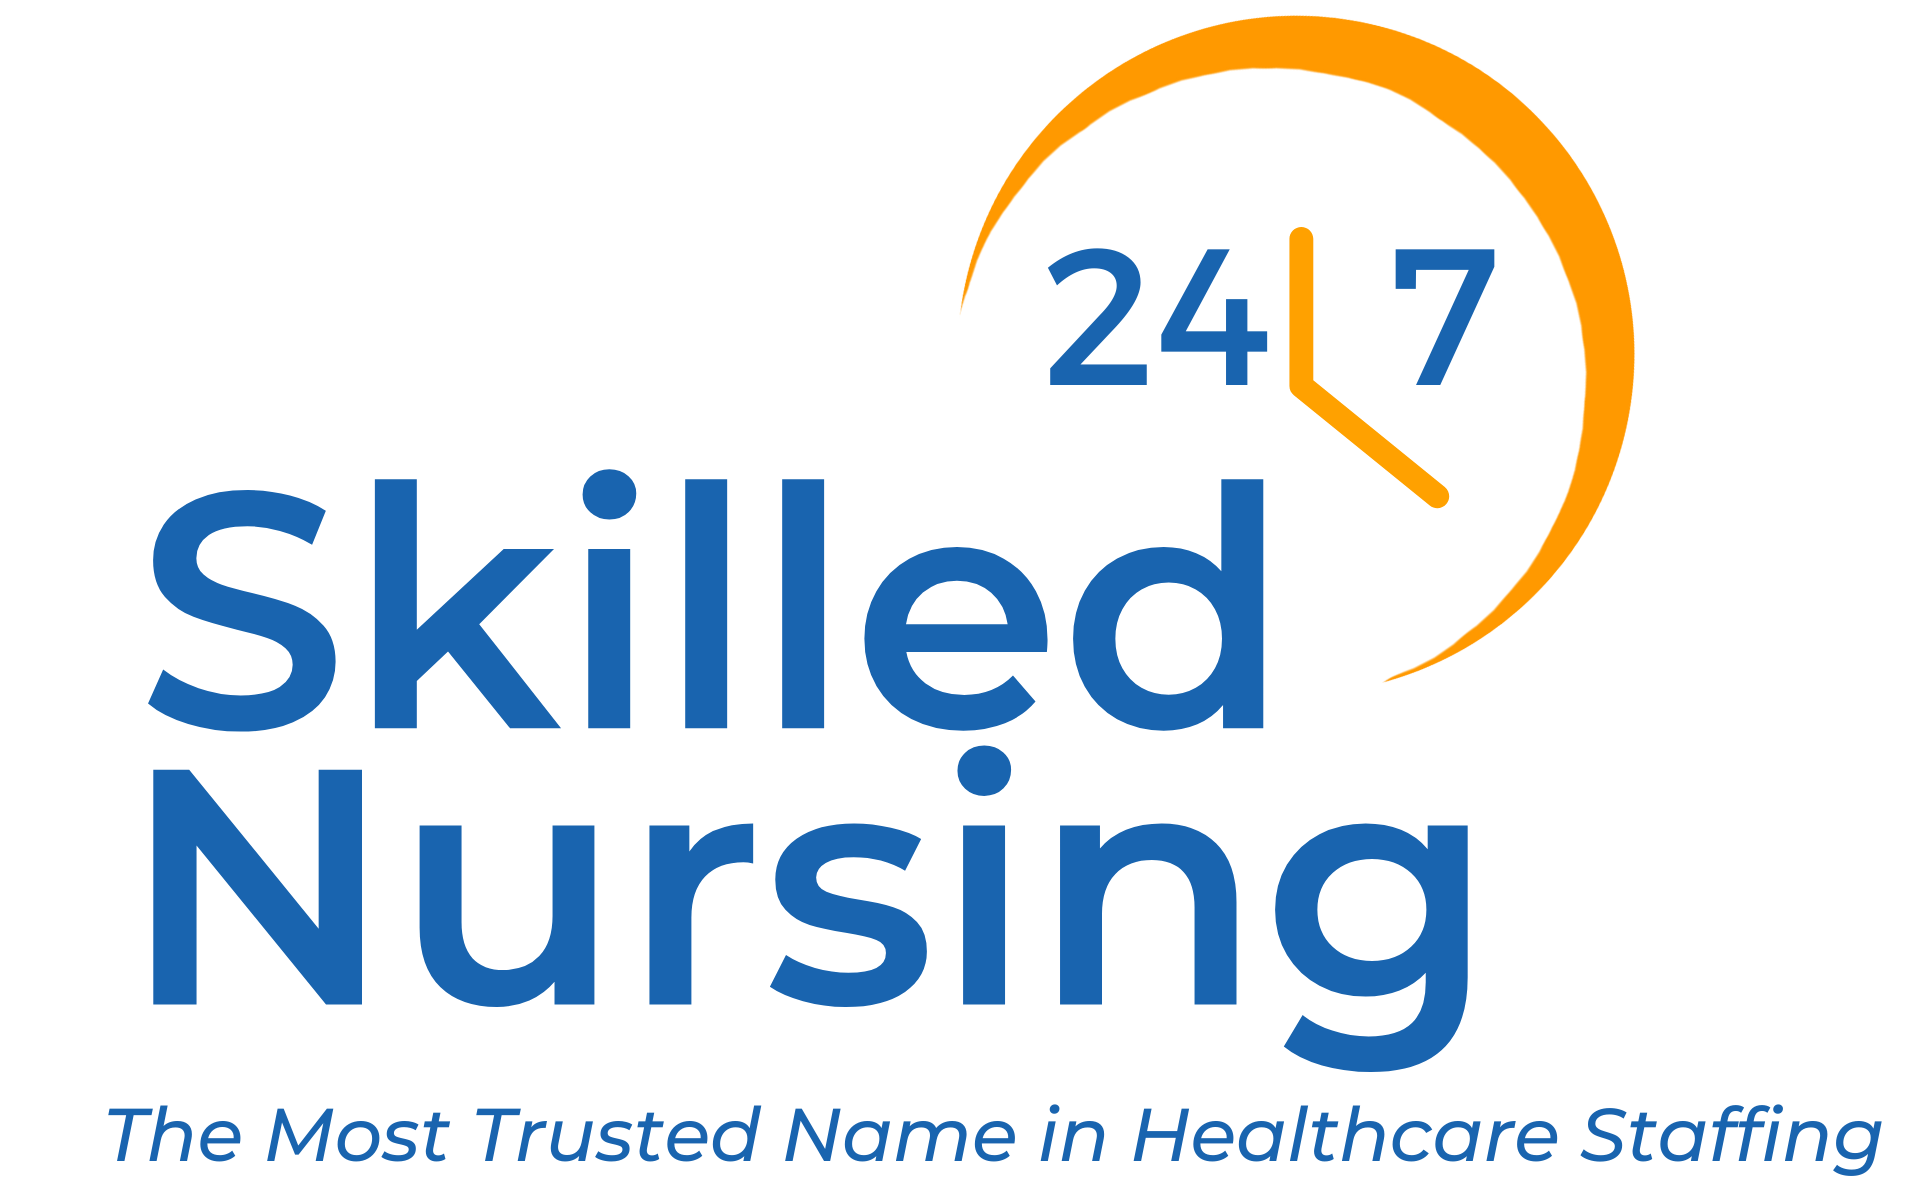 Skilled Nursing 24/7